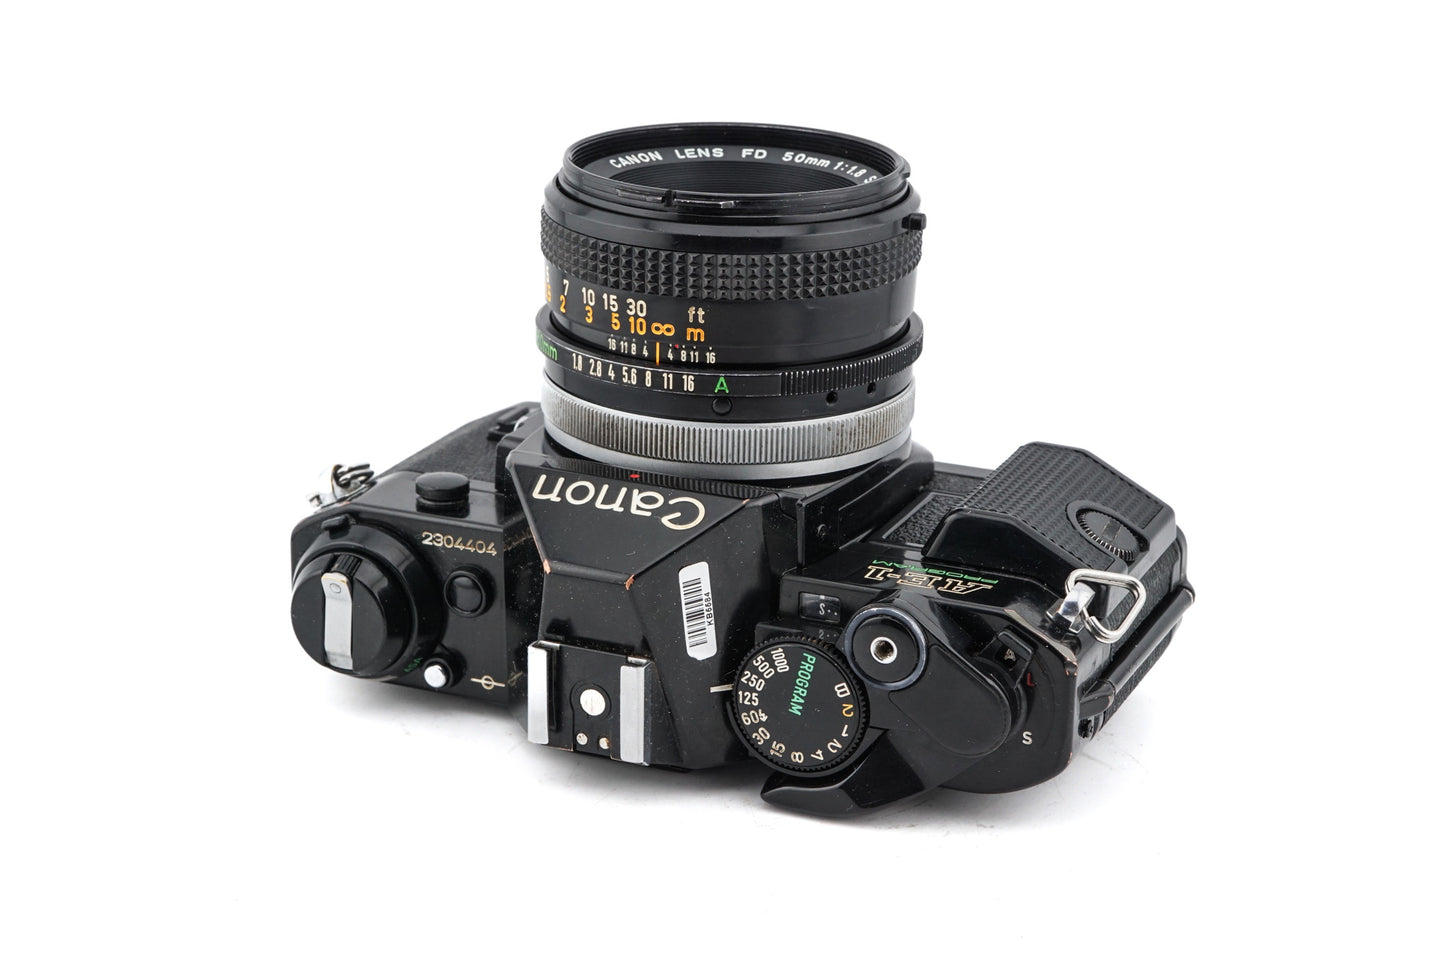 Canon AE-1 Program + 50mm f1.8 S.C.